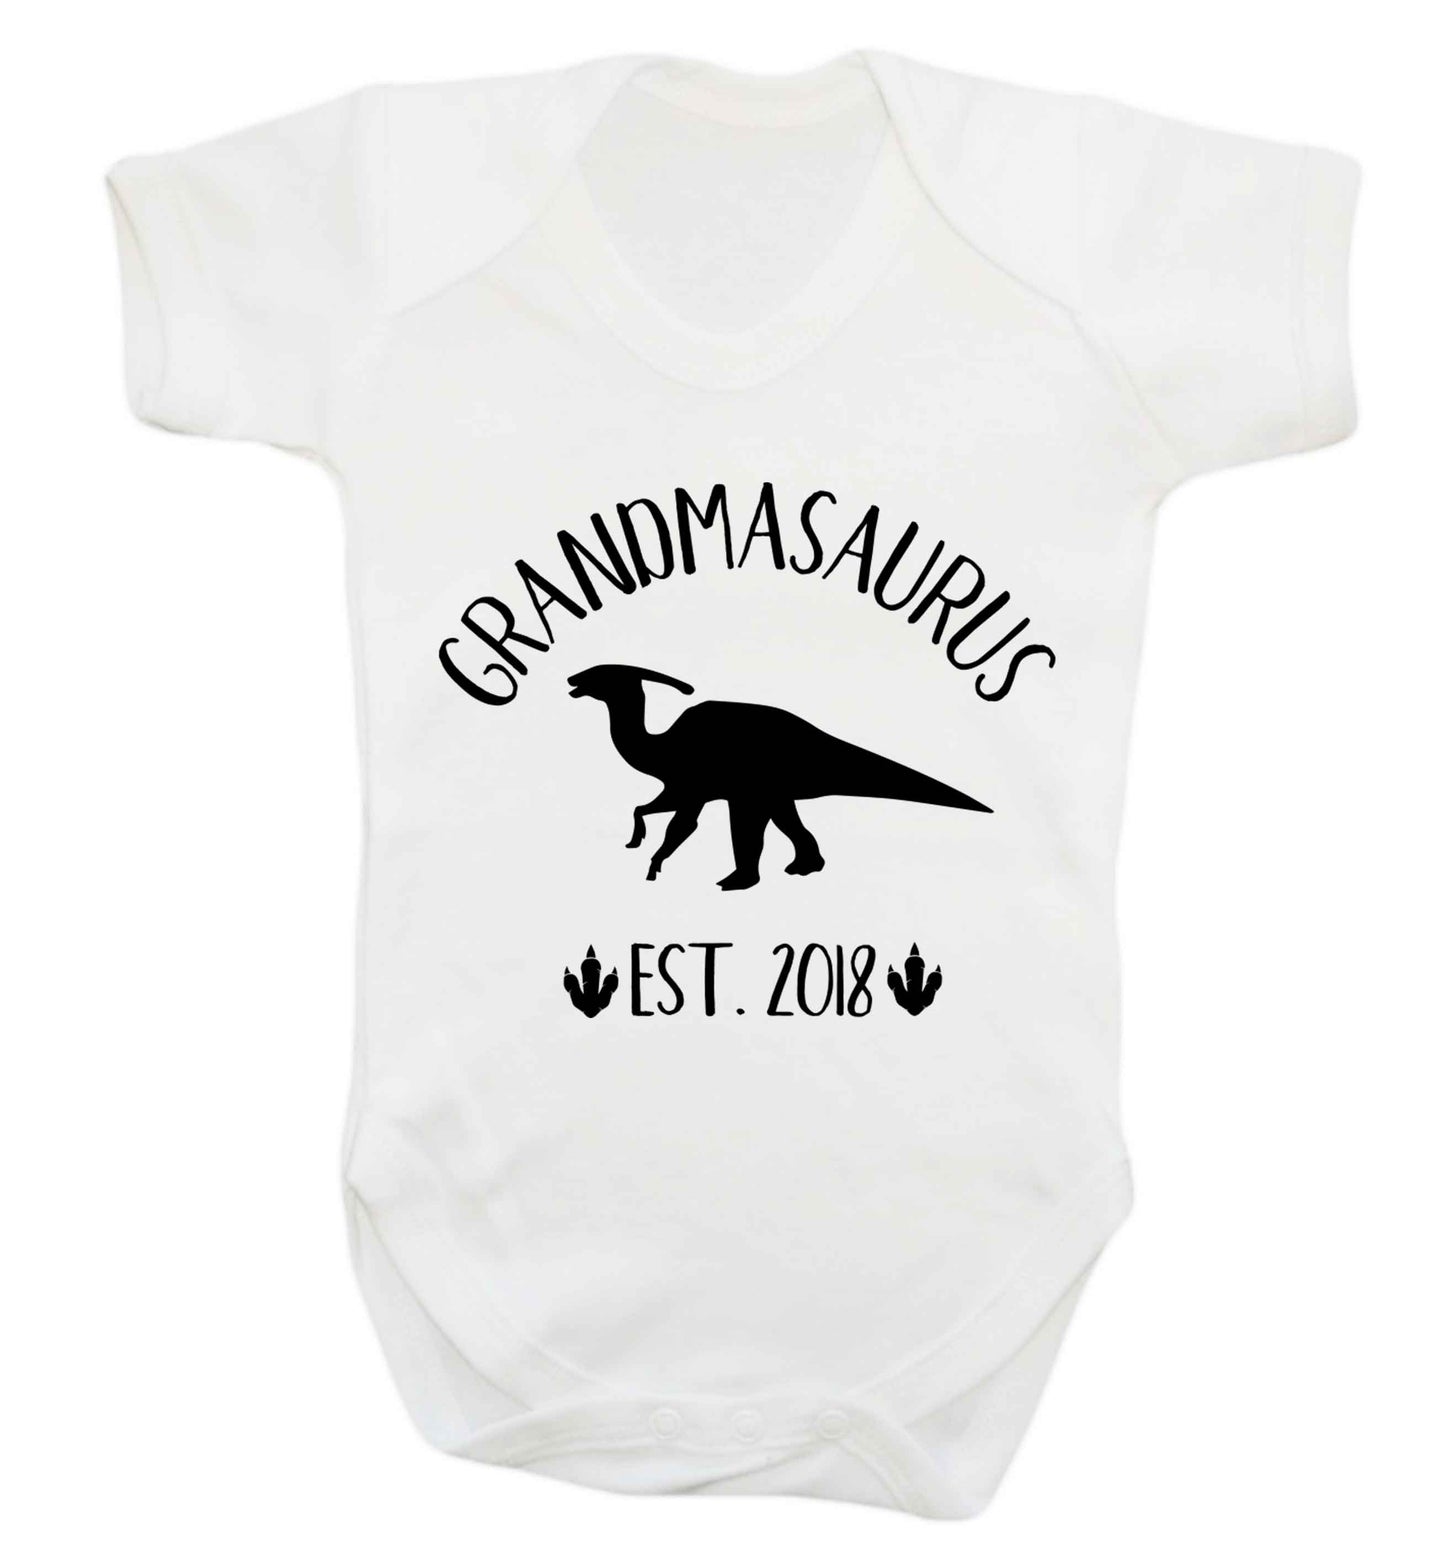 Personalised grandmasaurus since (custom date) Baby Vest white 18-24 months